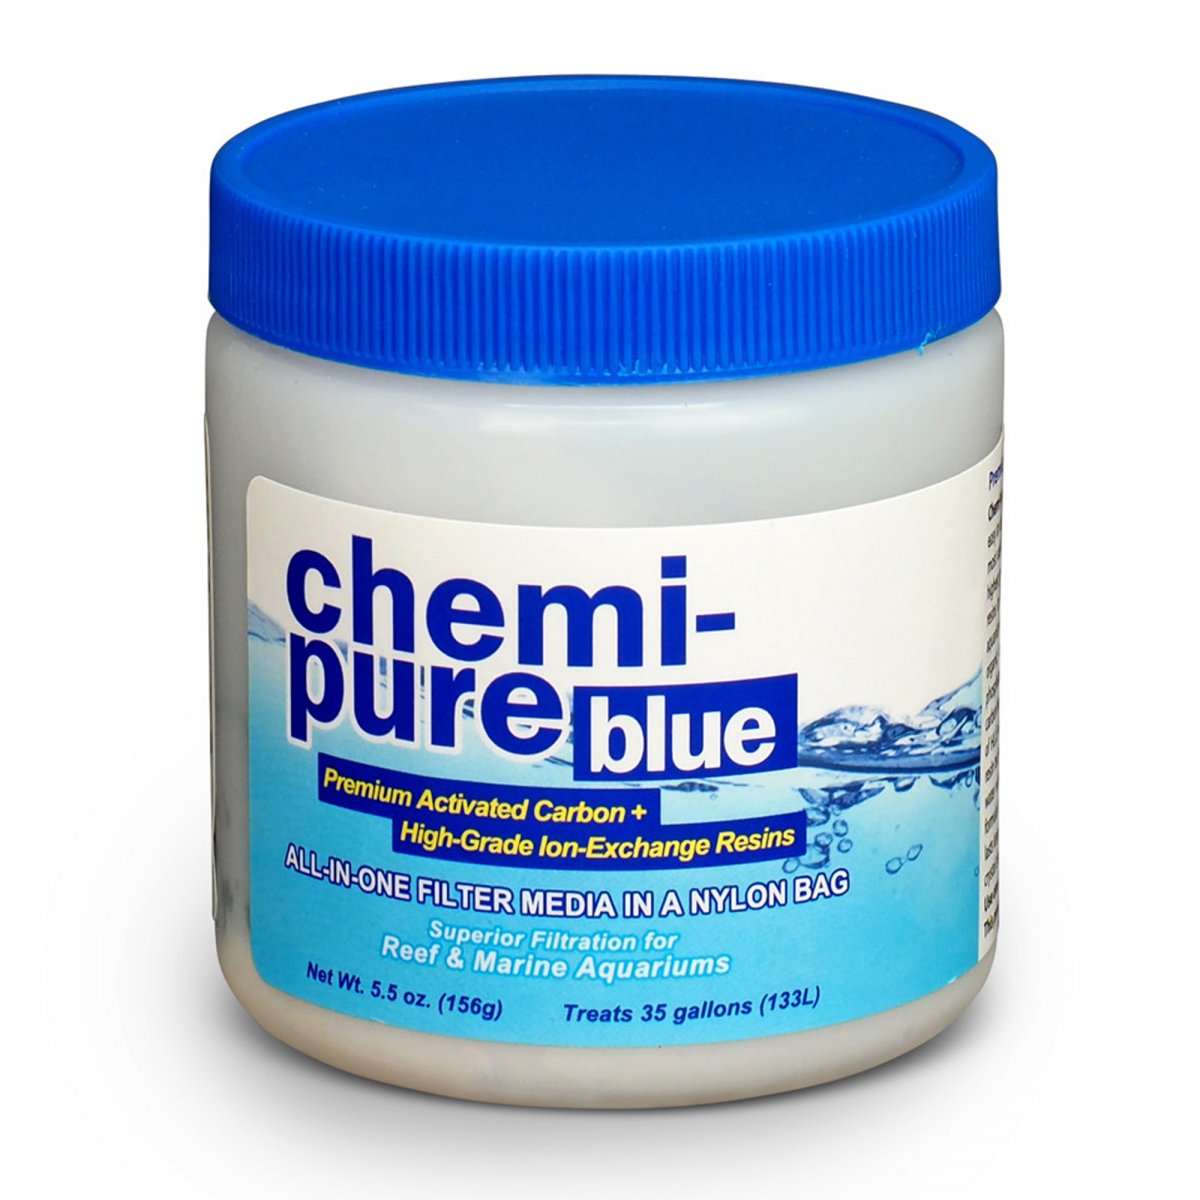 Chemi-pure Blue 5.5 oz.jpg